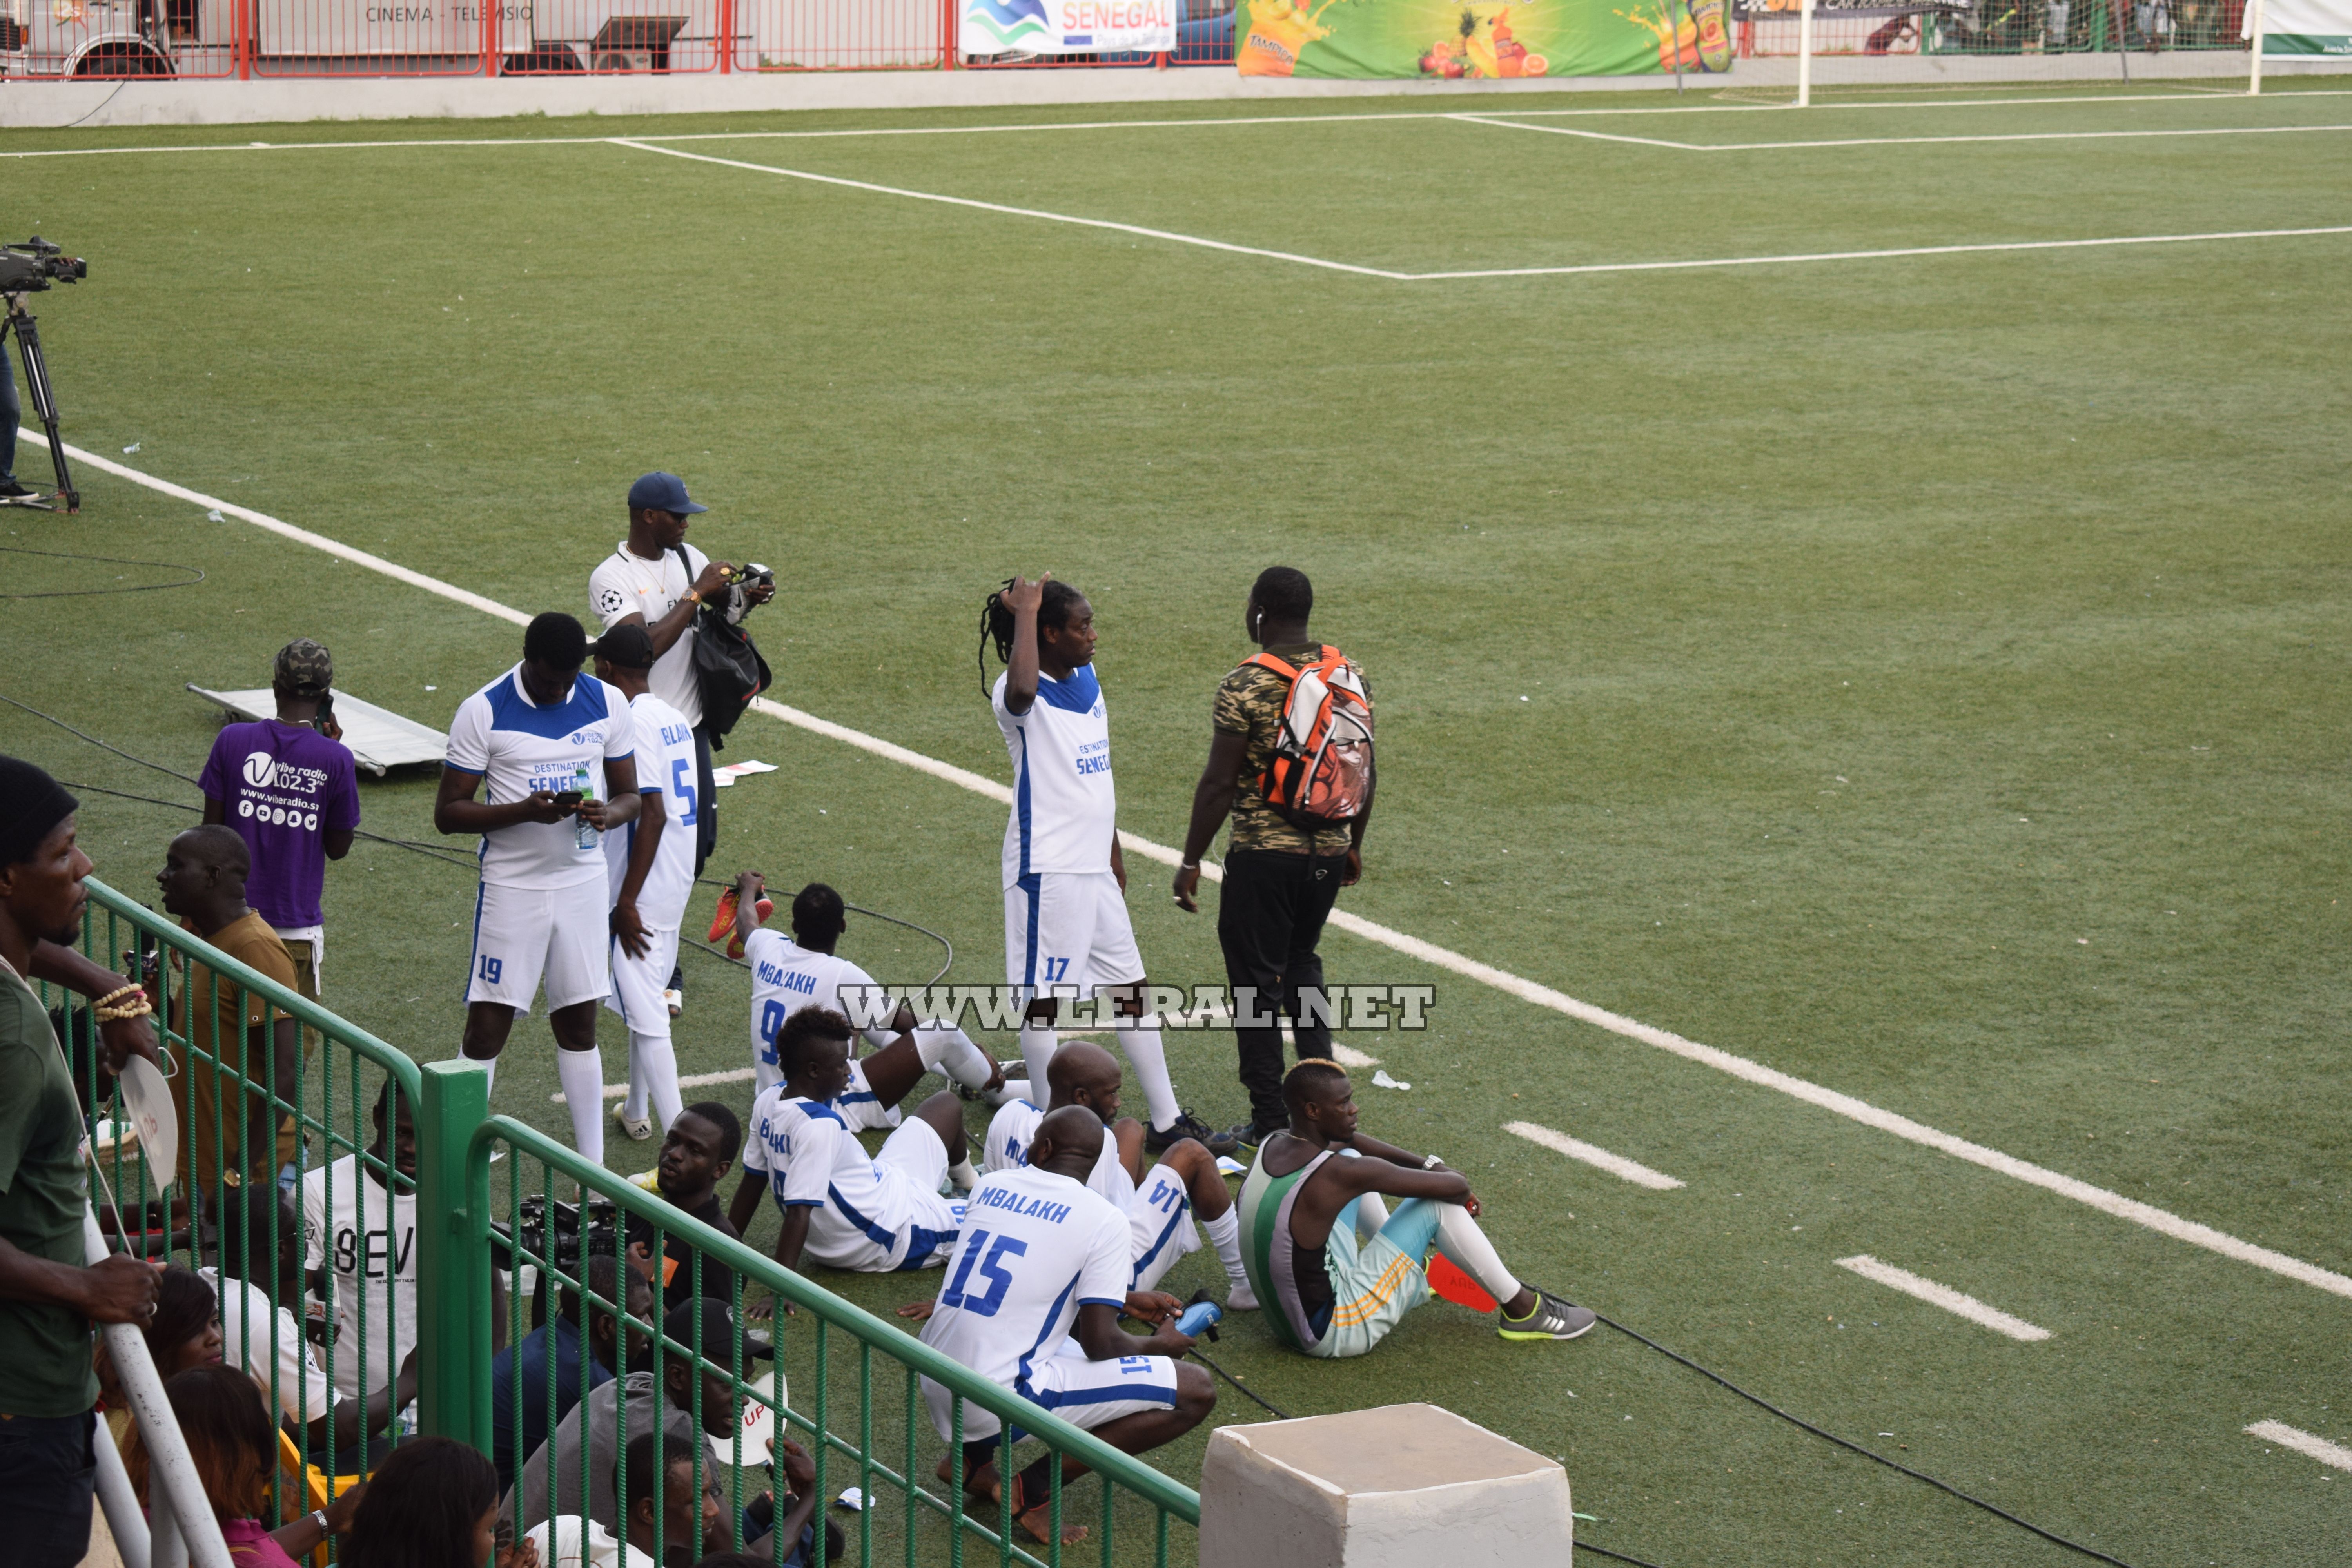 20 photos: Match Mbalaxman contre Rappeurs